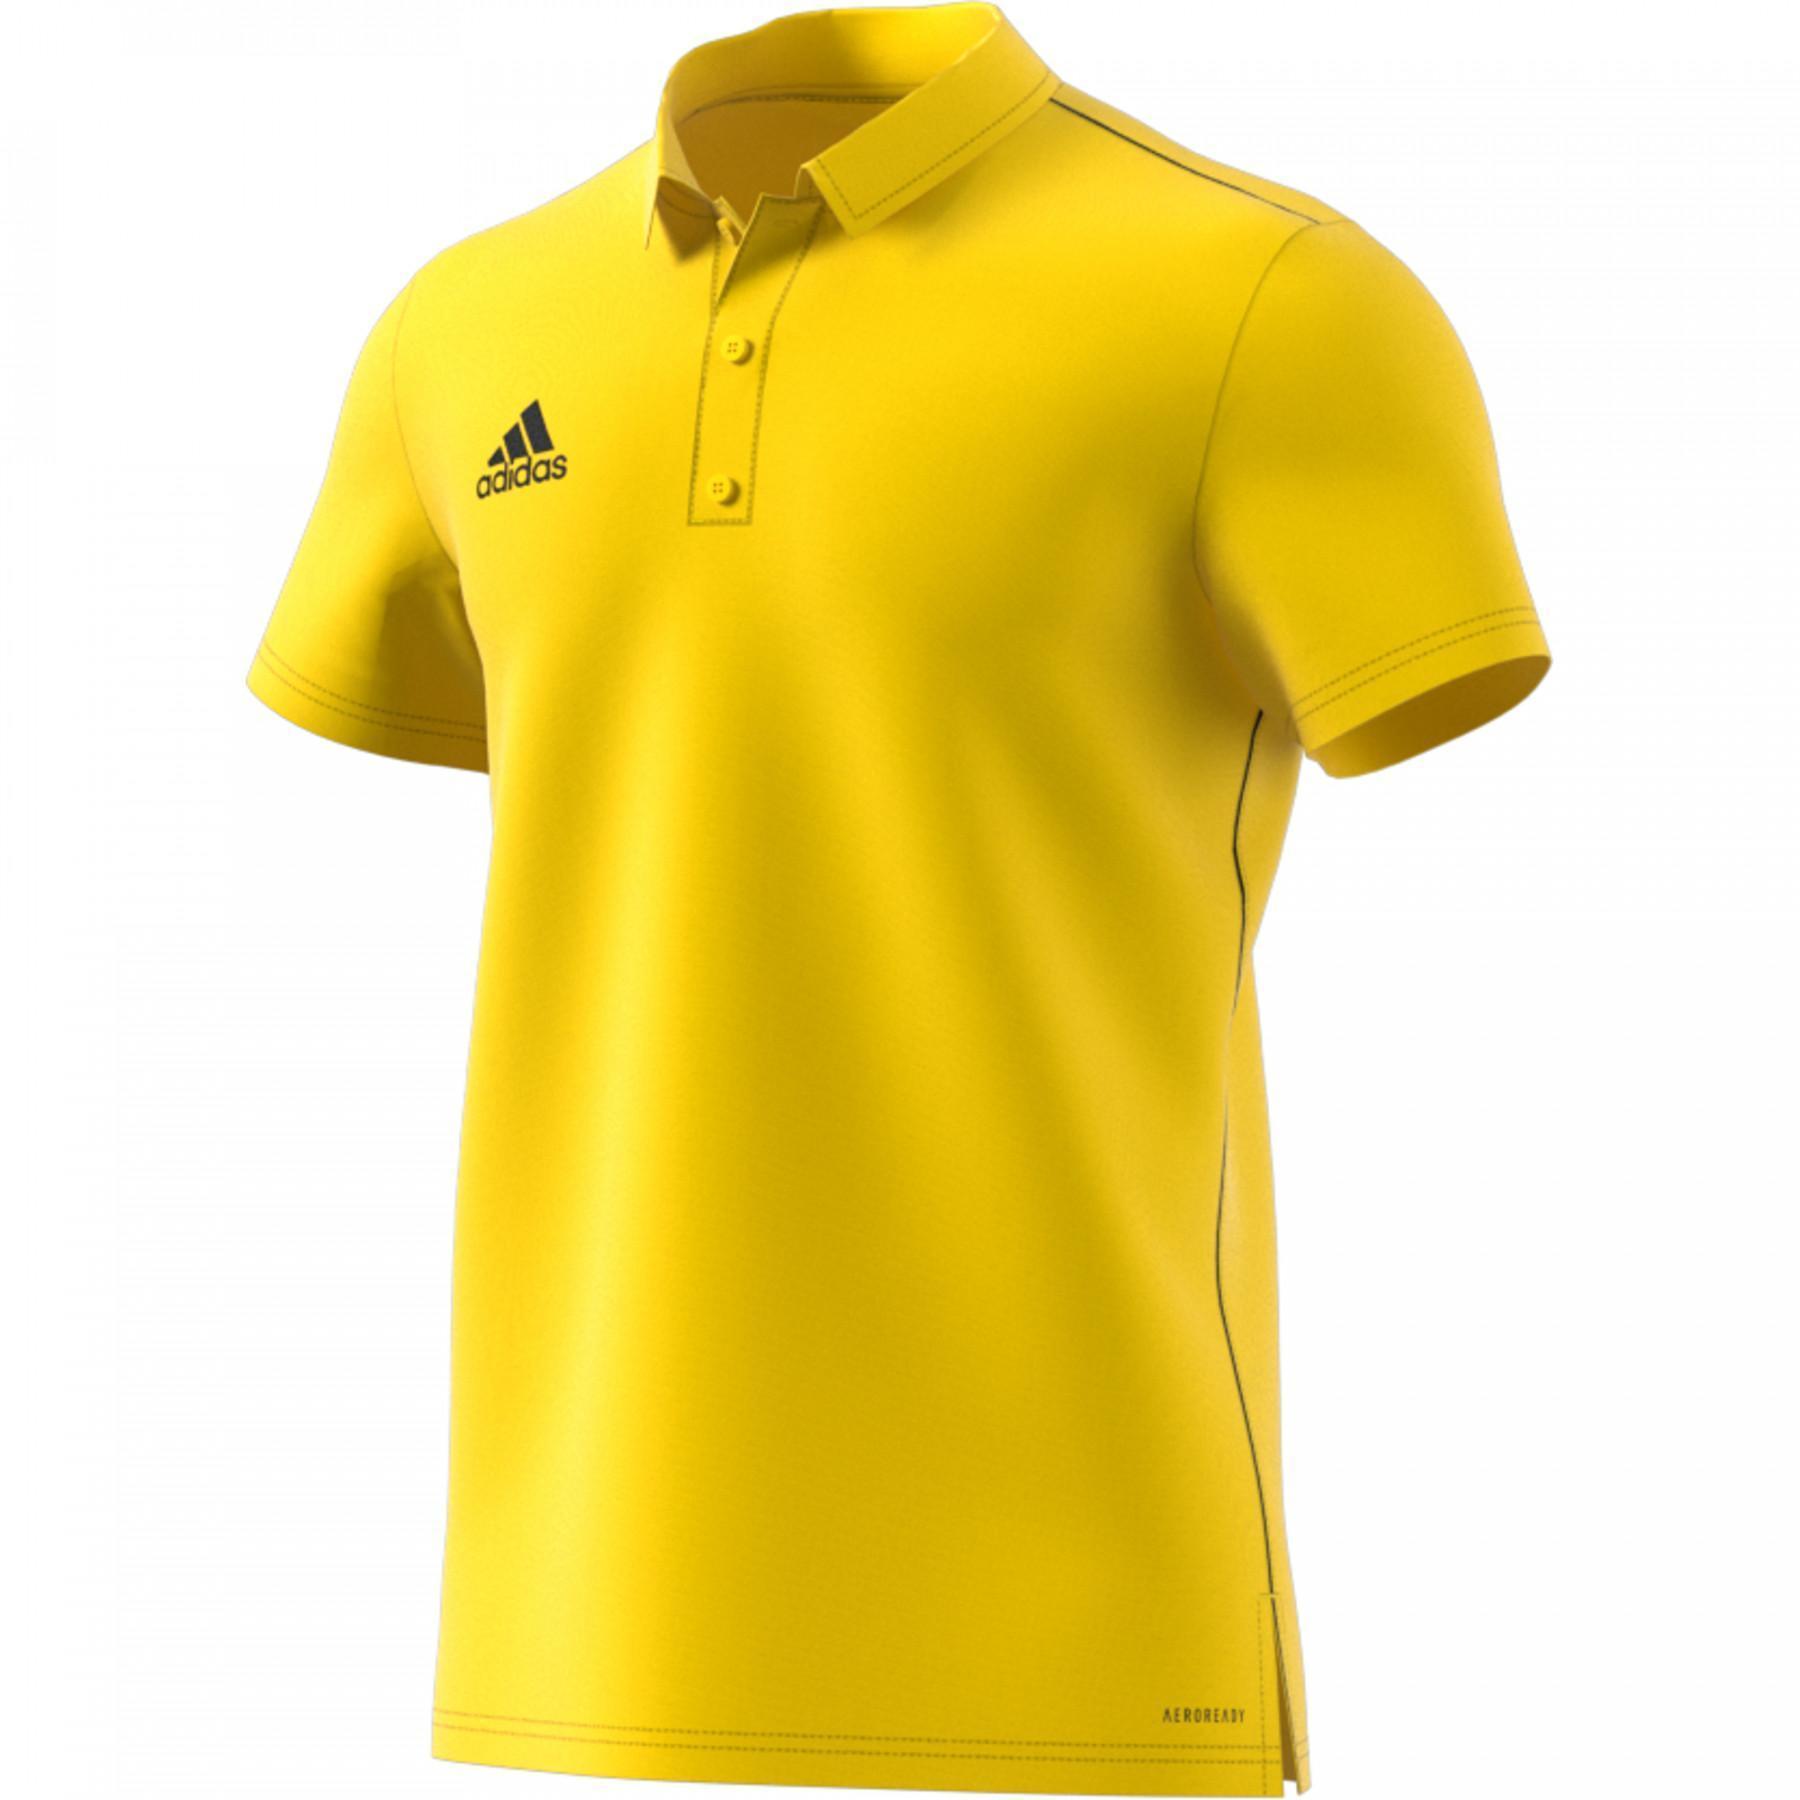 Polo adidas 18 Climalite - adidas - Shirts - Teamwear